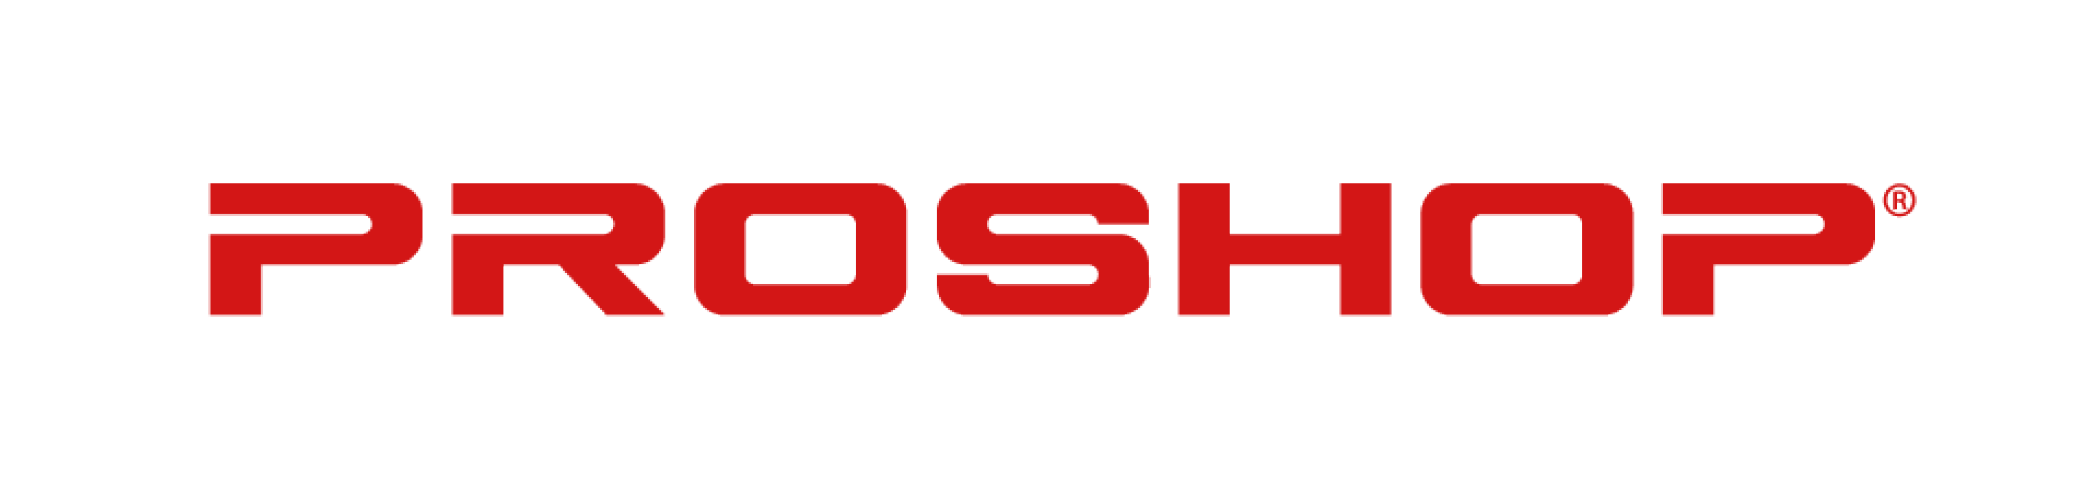 retailer-logo-proshop-500x120-300dpi